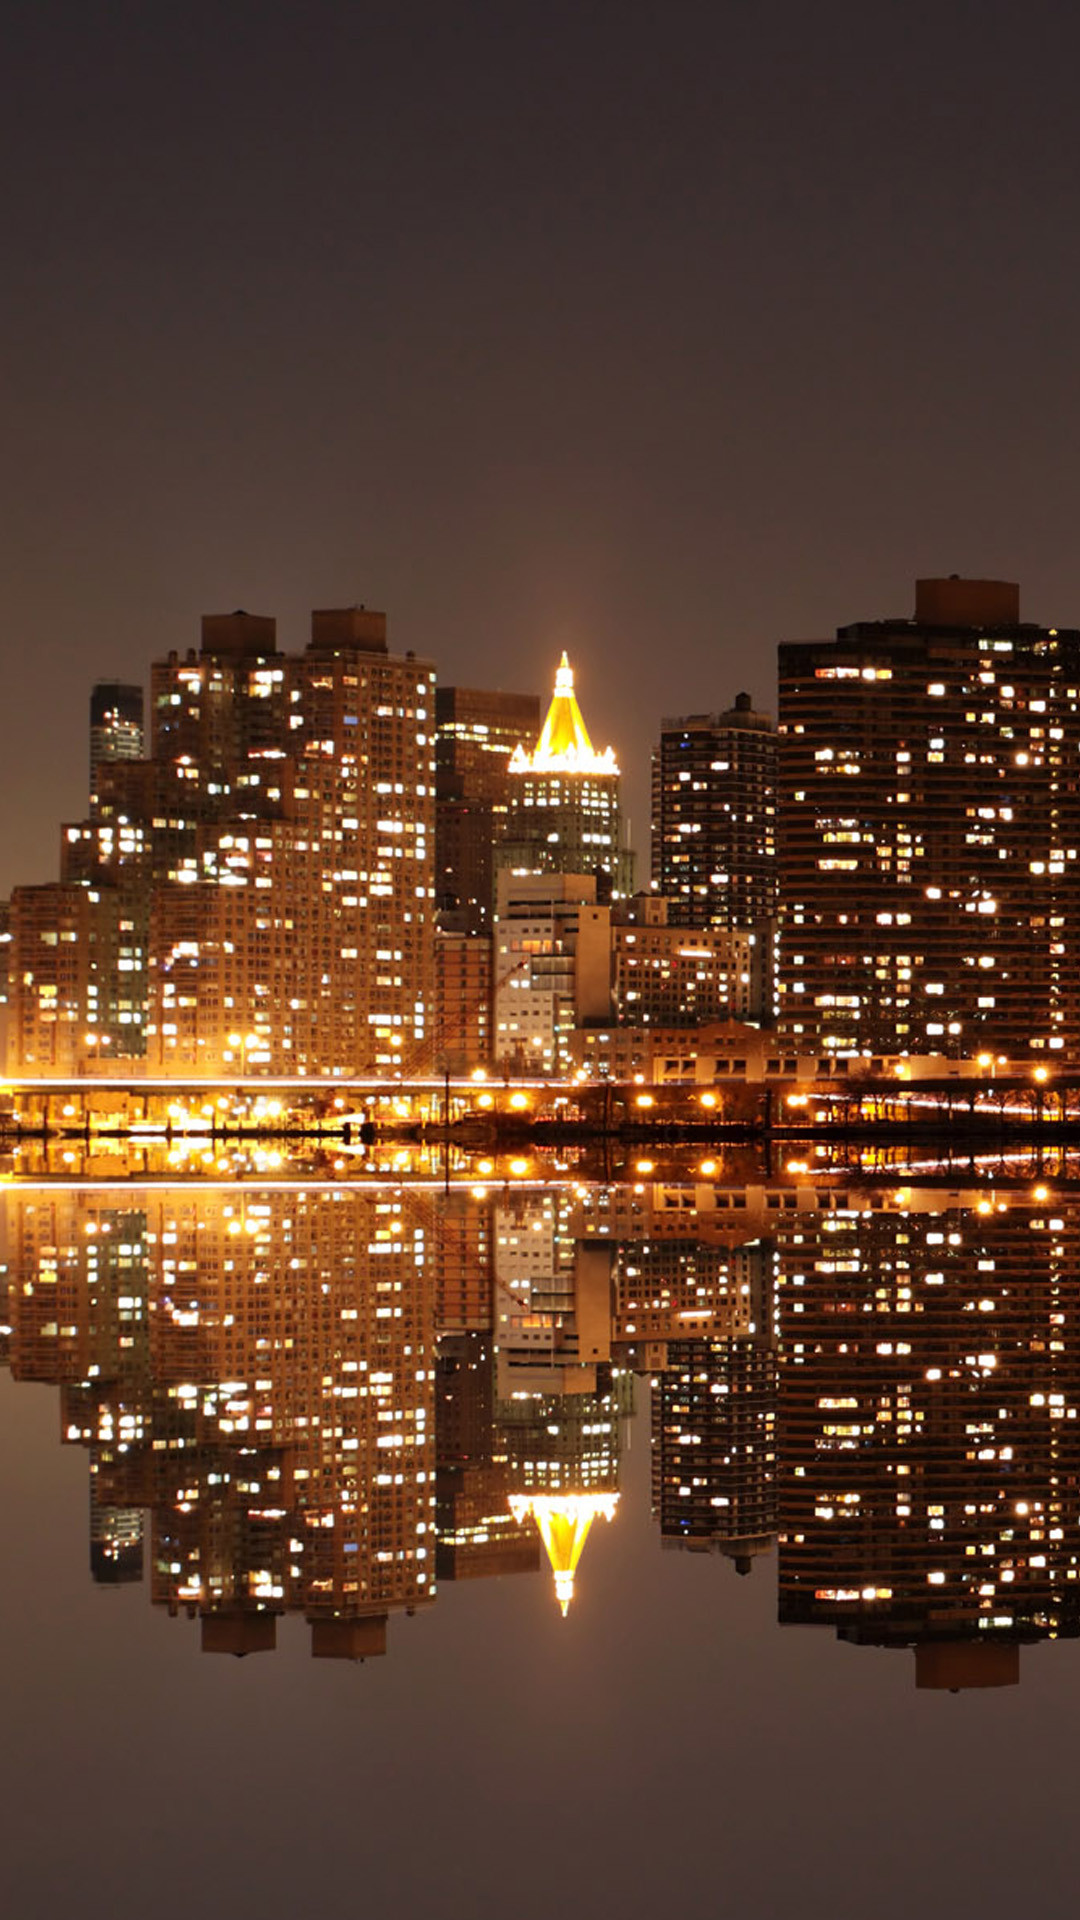 1080x1920 HD City Reflection At Night Android Wallpaper ...